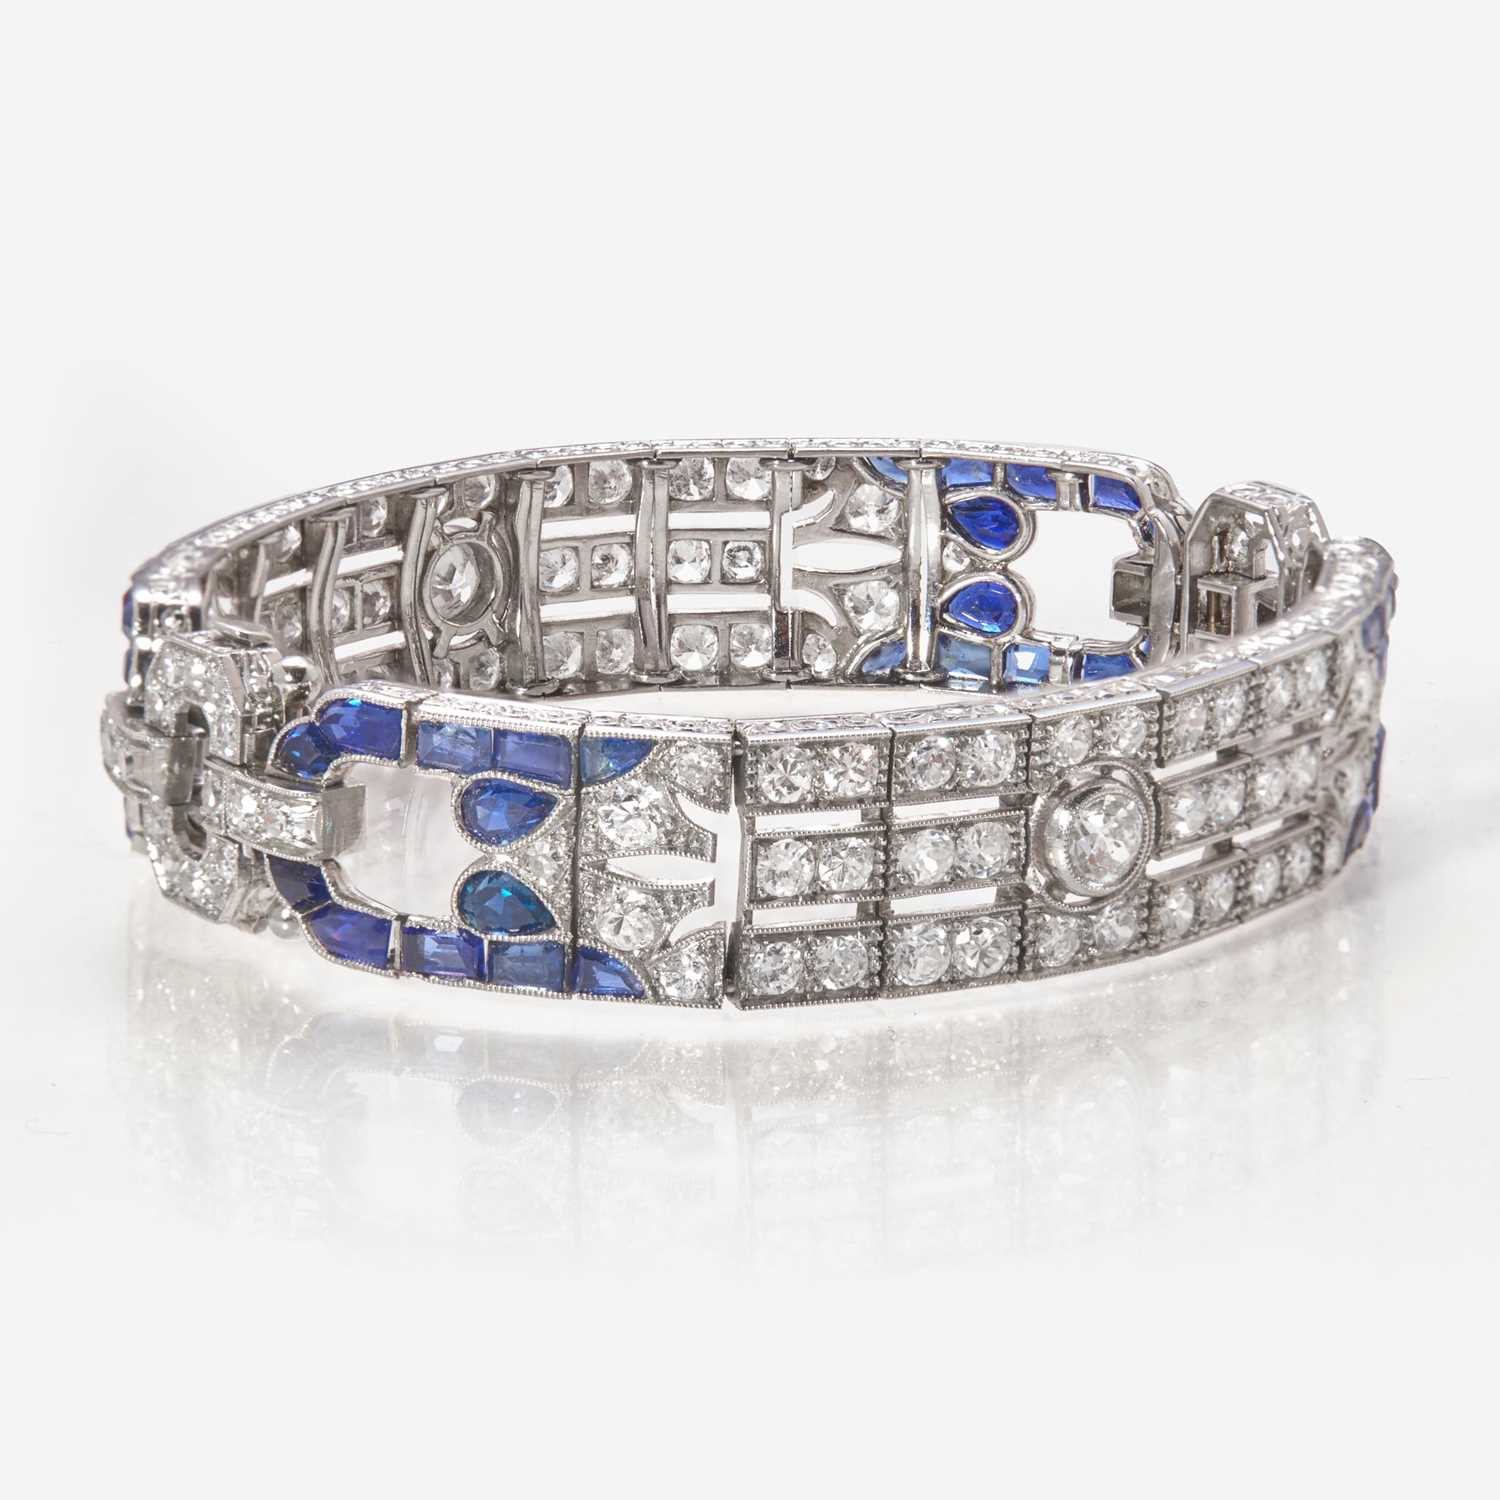 Lot 15 - An Art Deco Sapphire and Diamond Bracelet